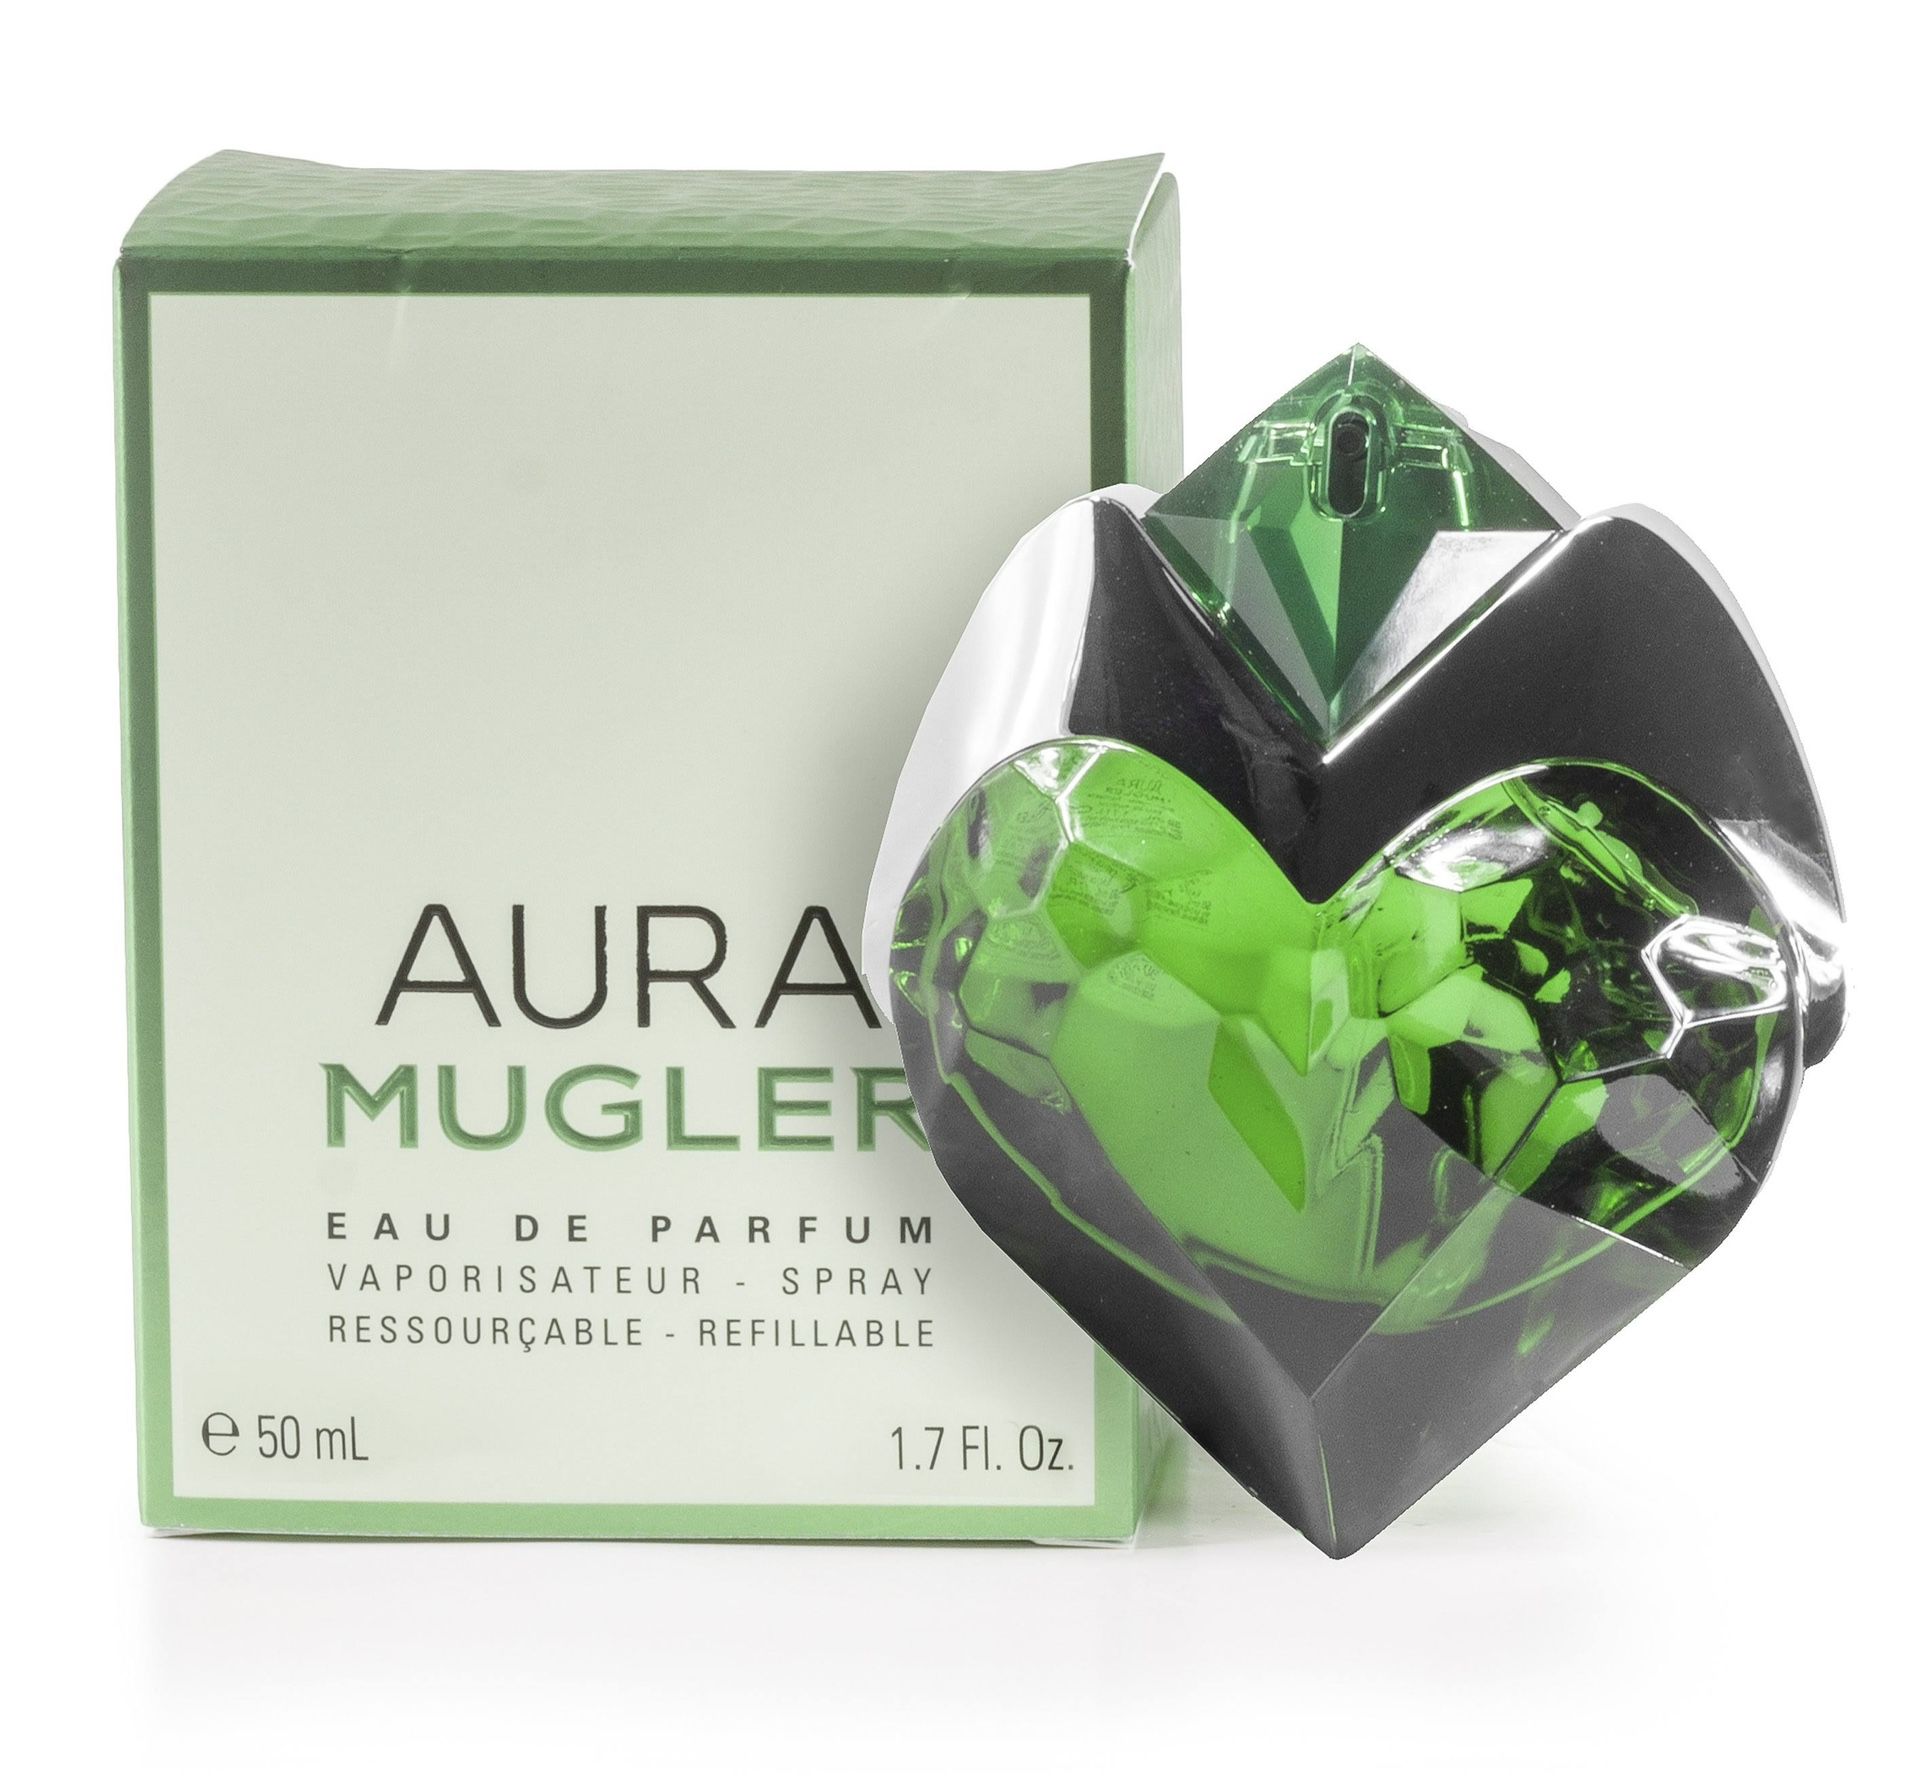 New! Woman’s Perfume! 50ml Aura Mugler! 